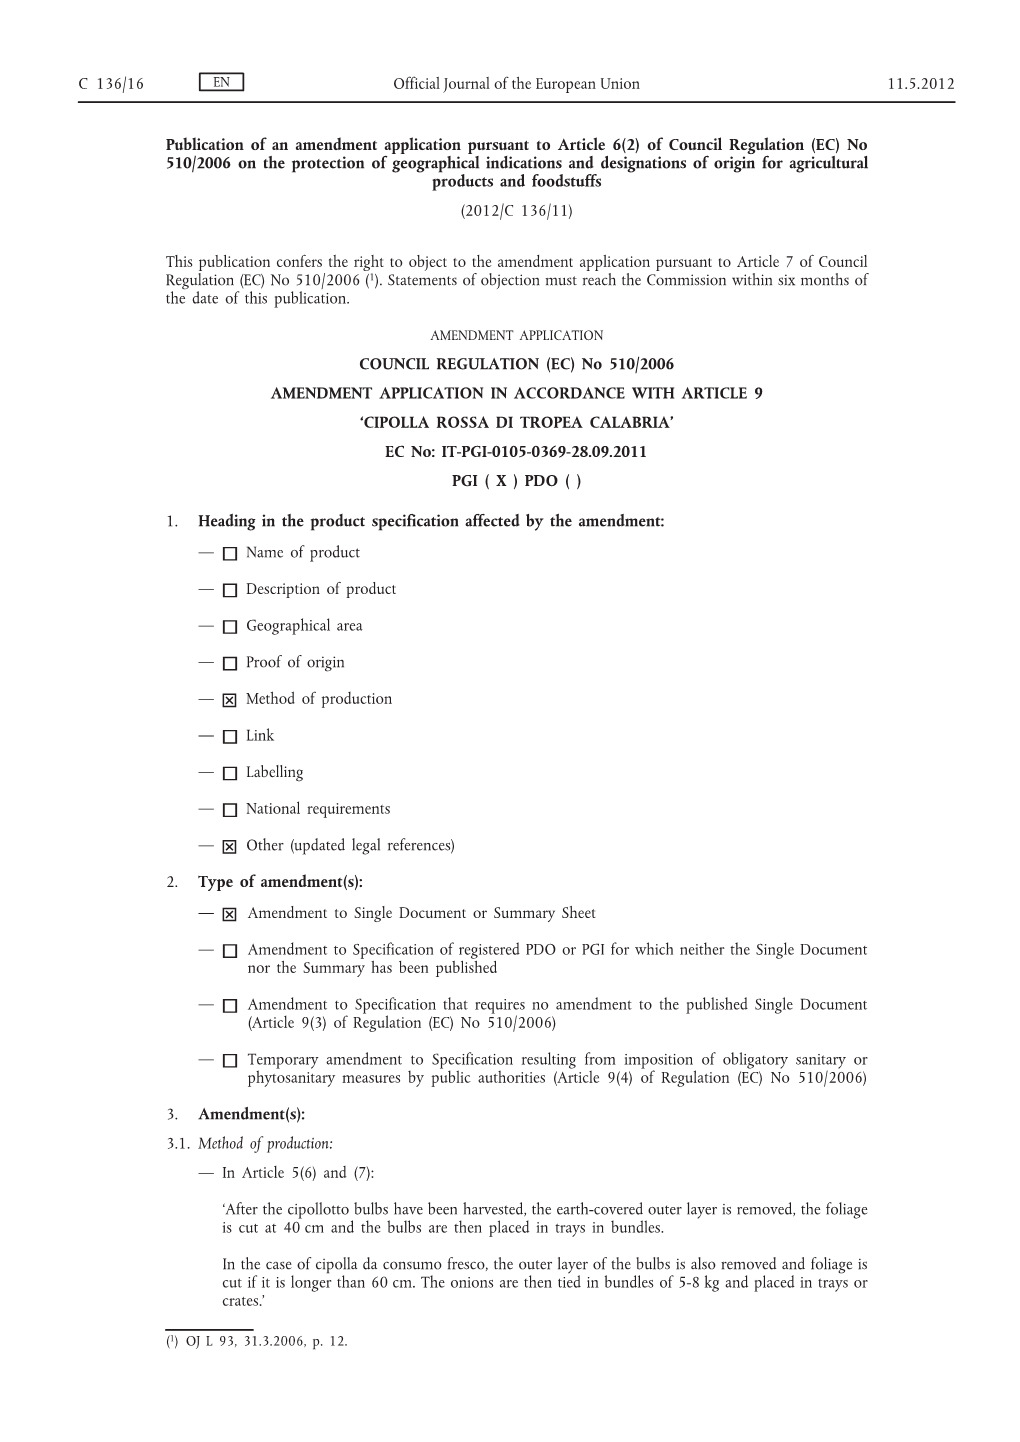 Publication of an Amendment Application Pursuant To